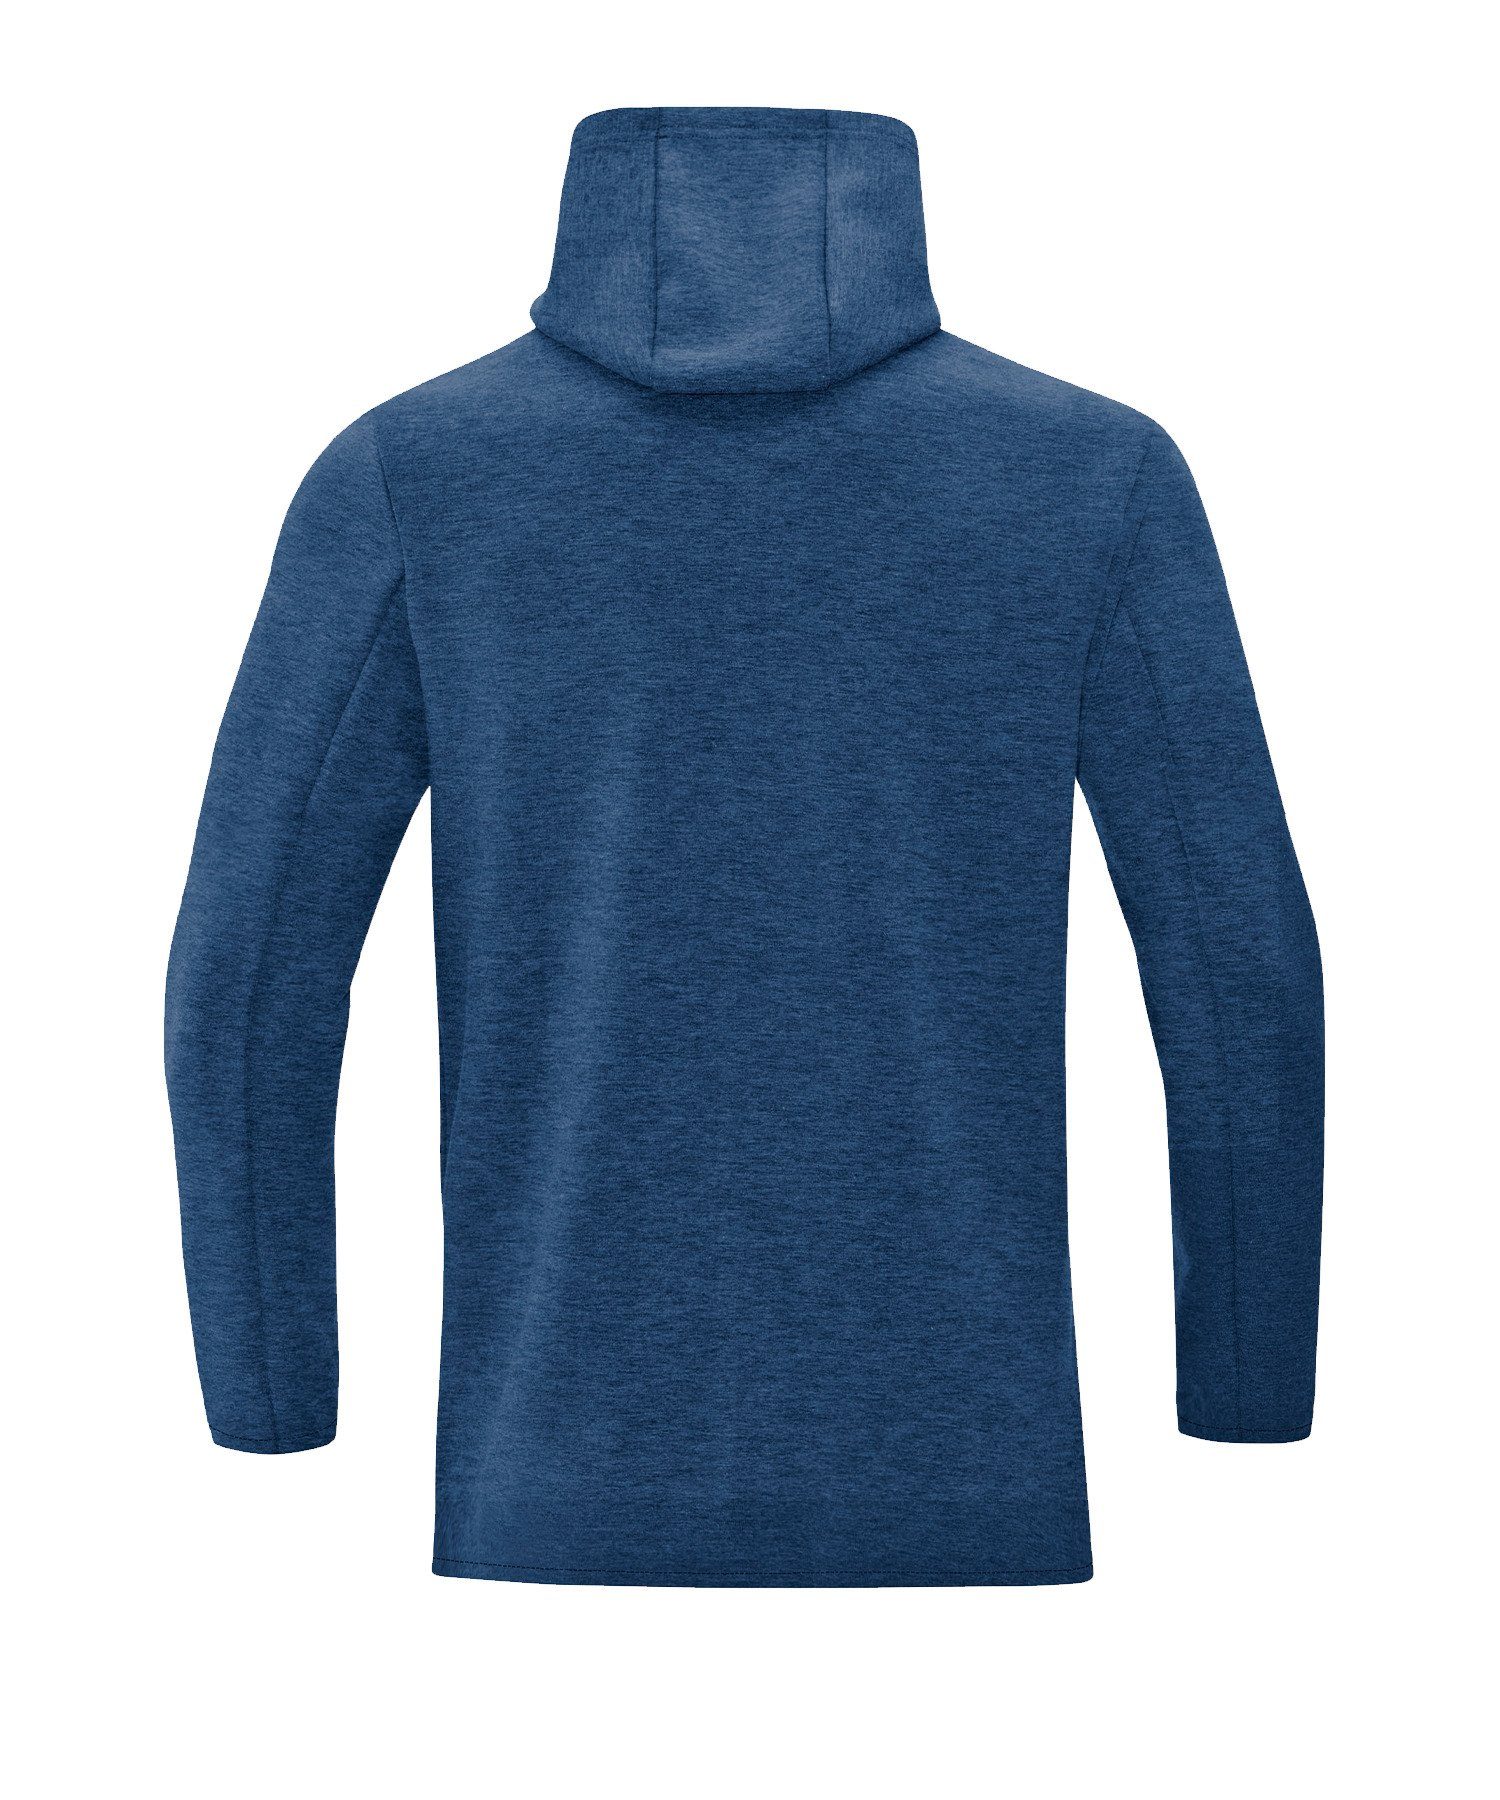 Hoody Jako Basic Damen blau Sweater Premium